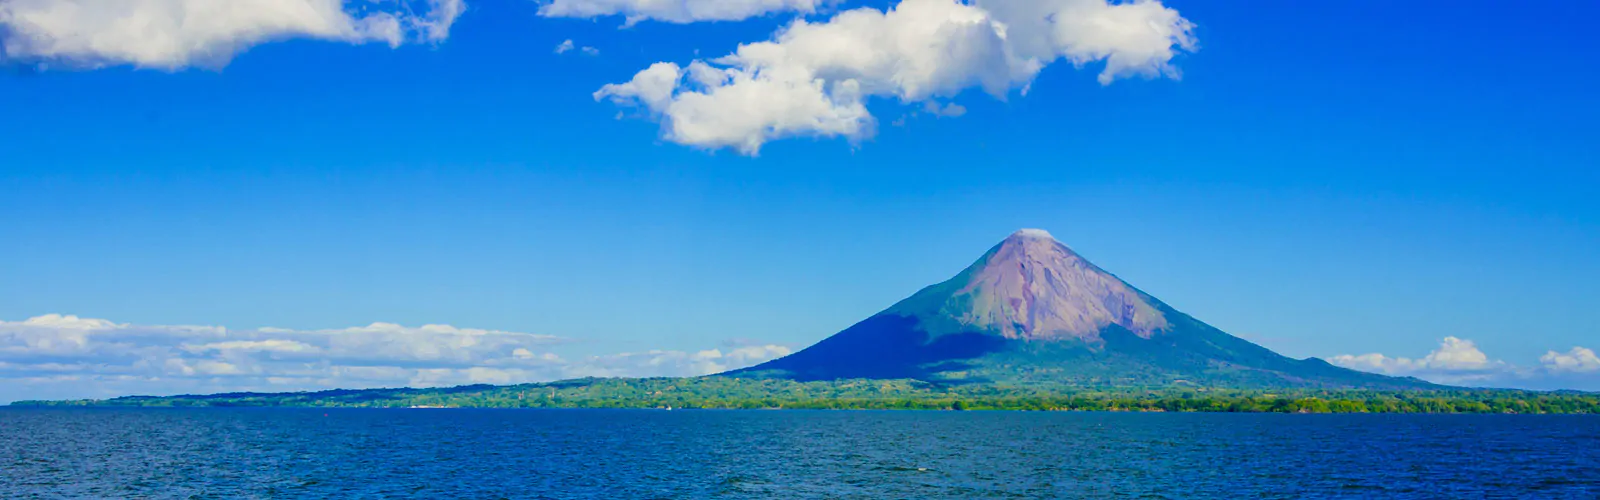 Никарагуа вулкан